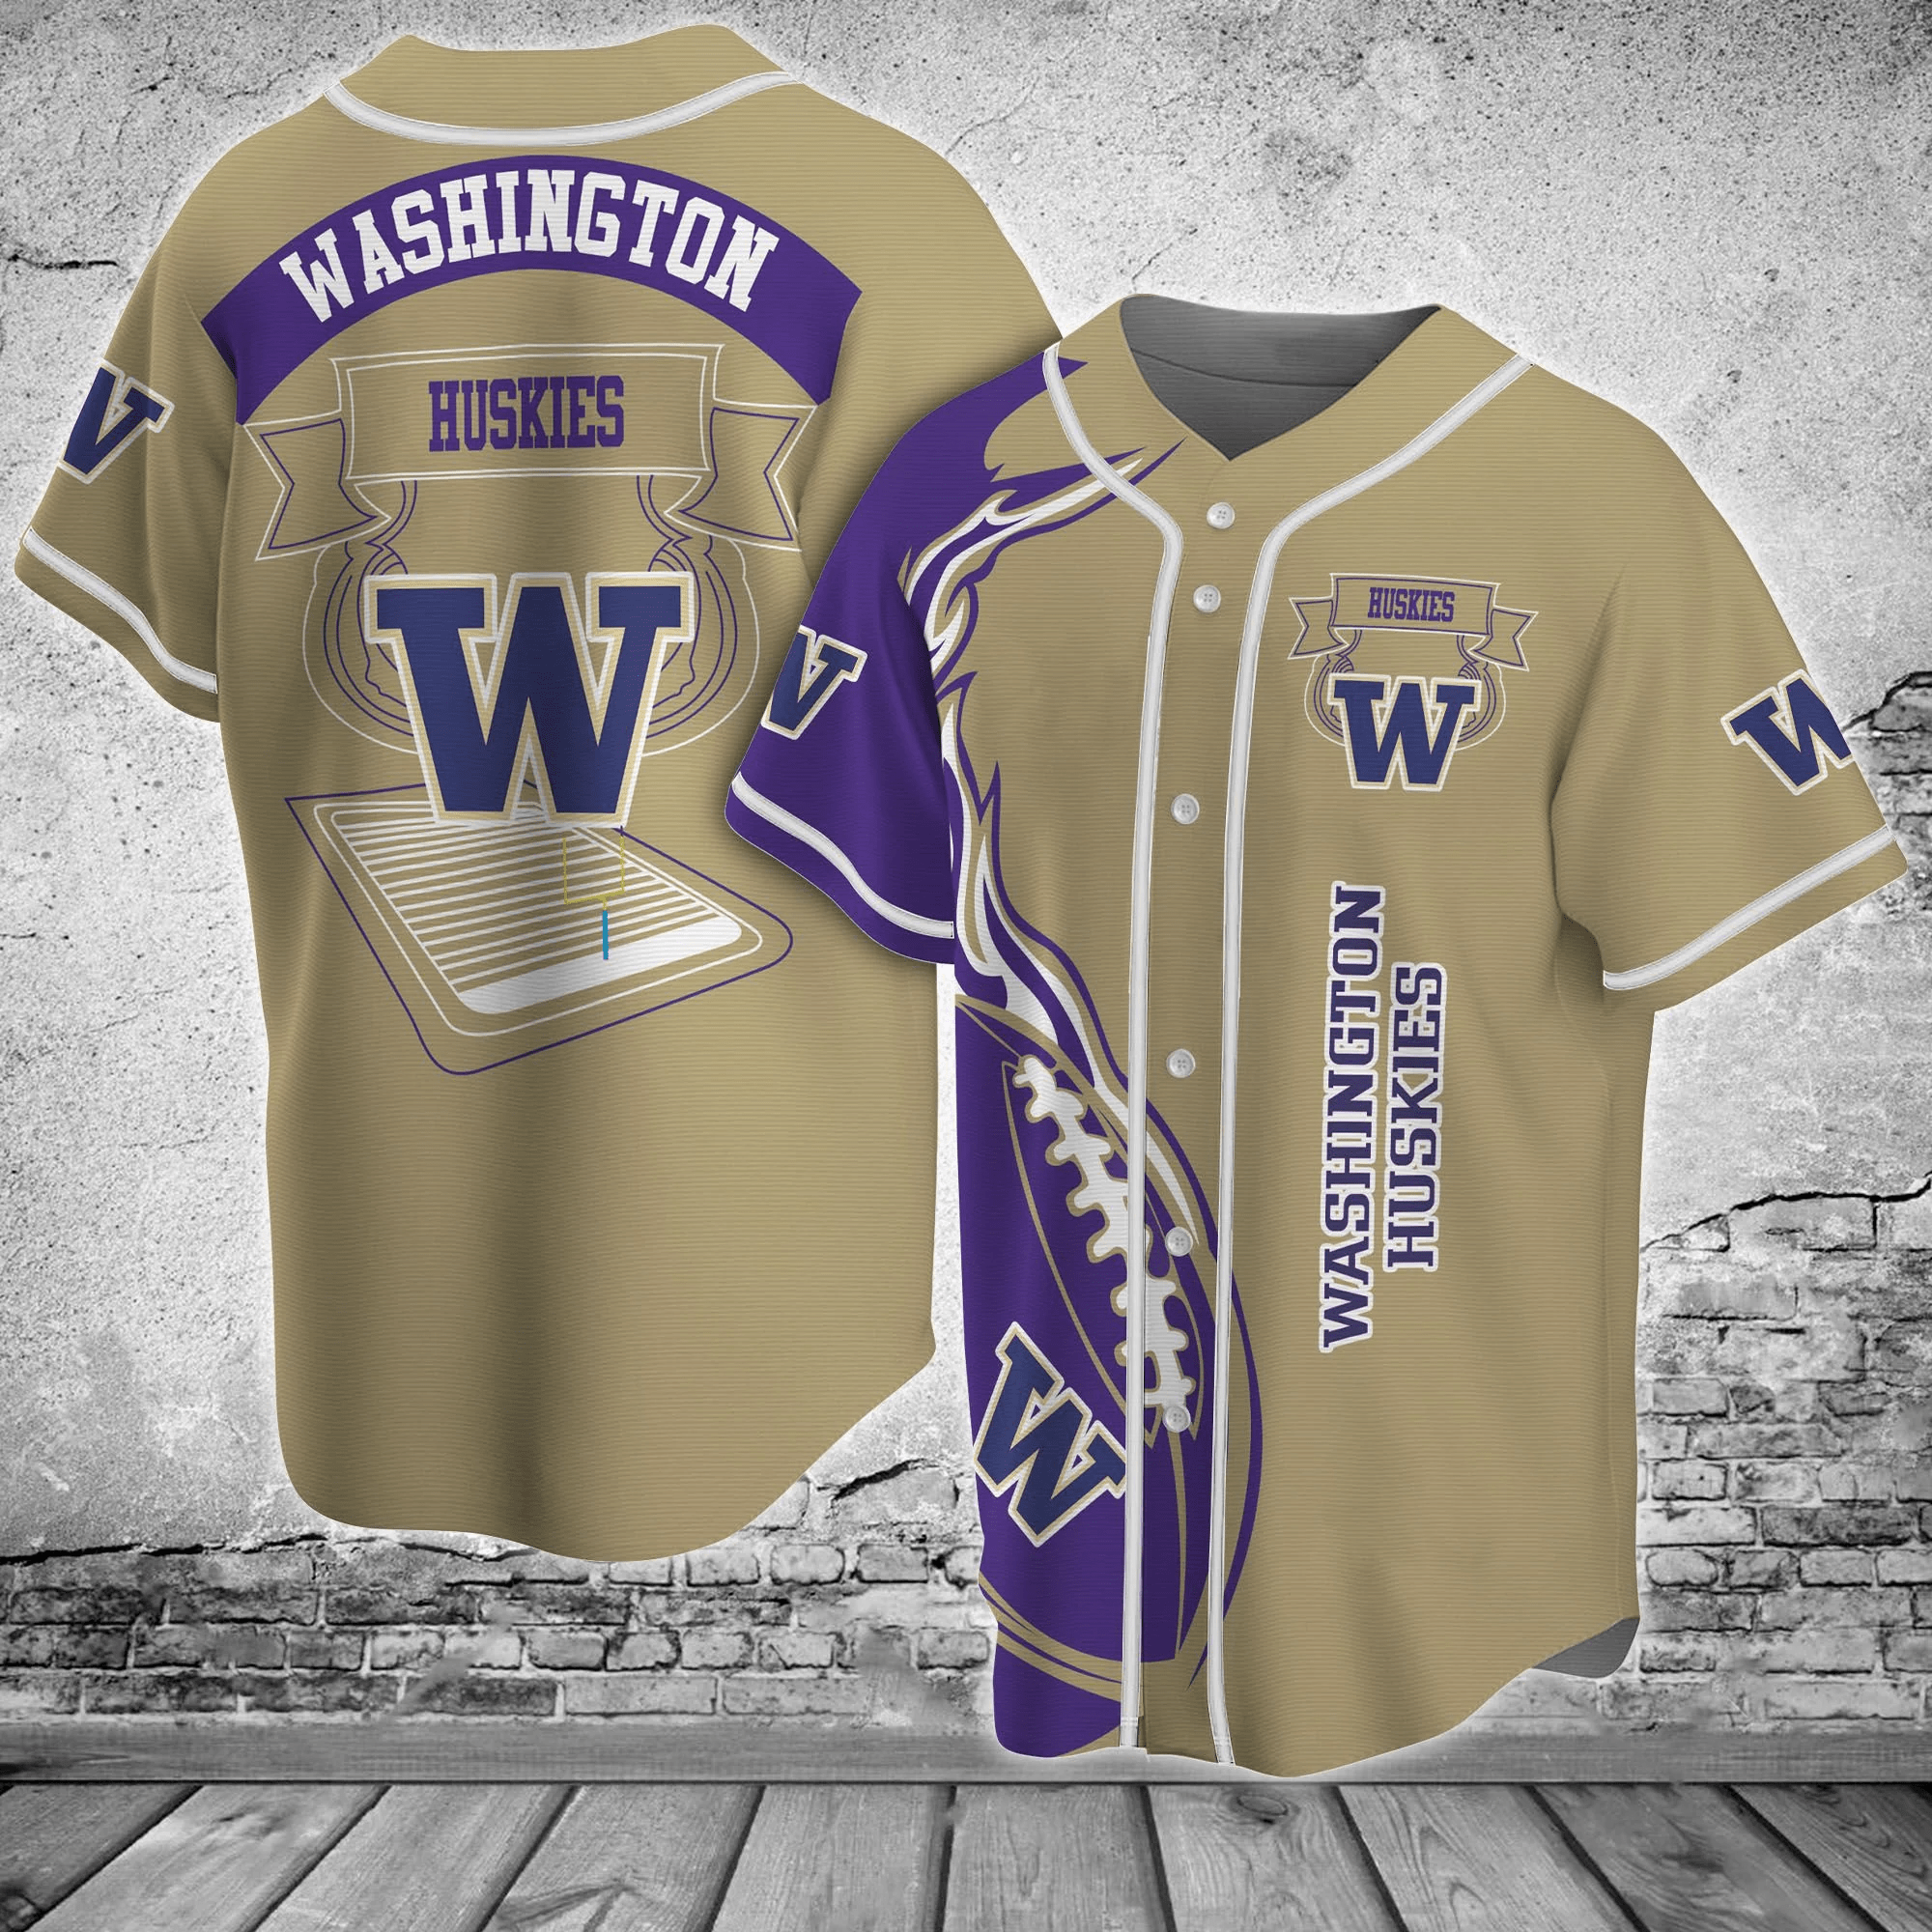  Washington Huskies NCAA Baseball Jersey Shirt Classic